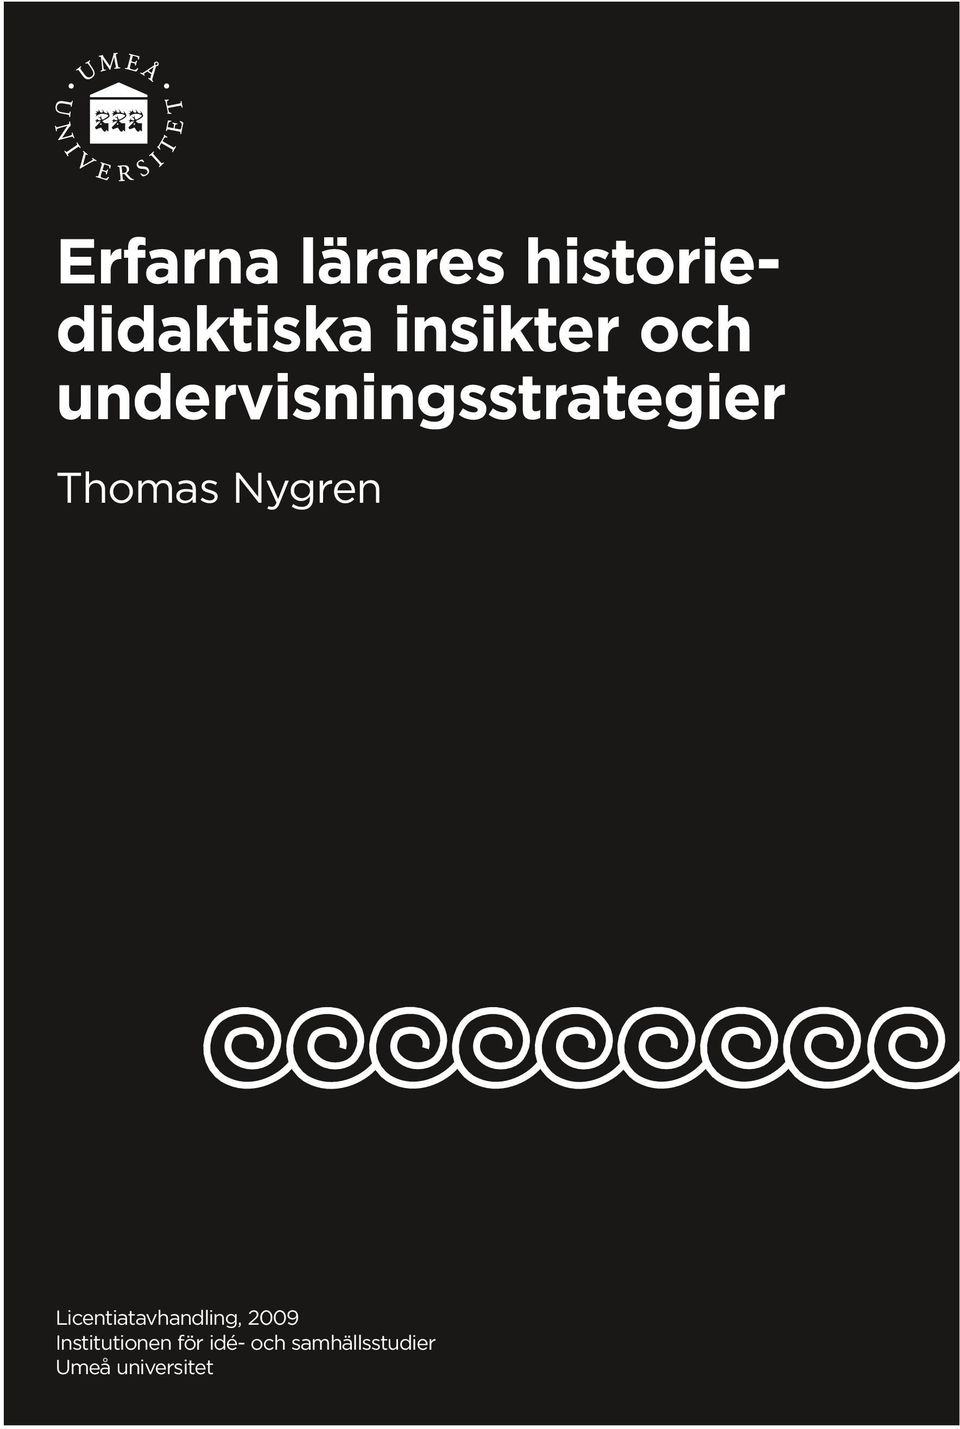 Thomas Nygren Licentiatavhandling, 2009